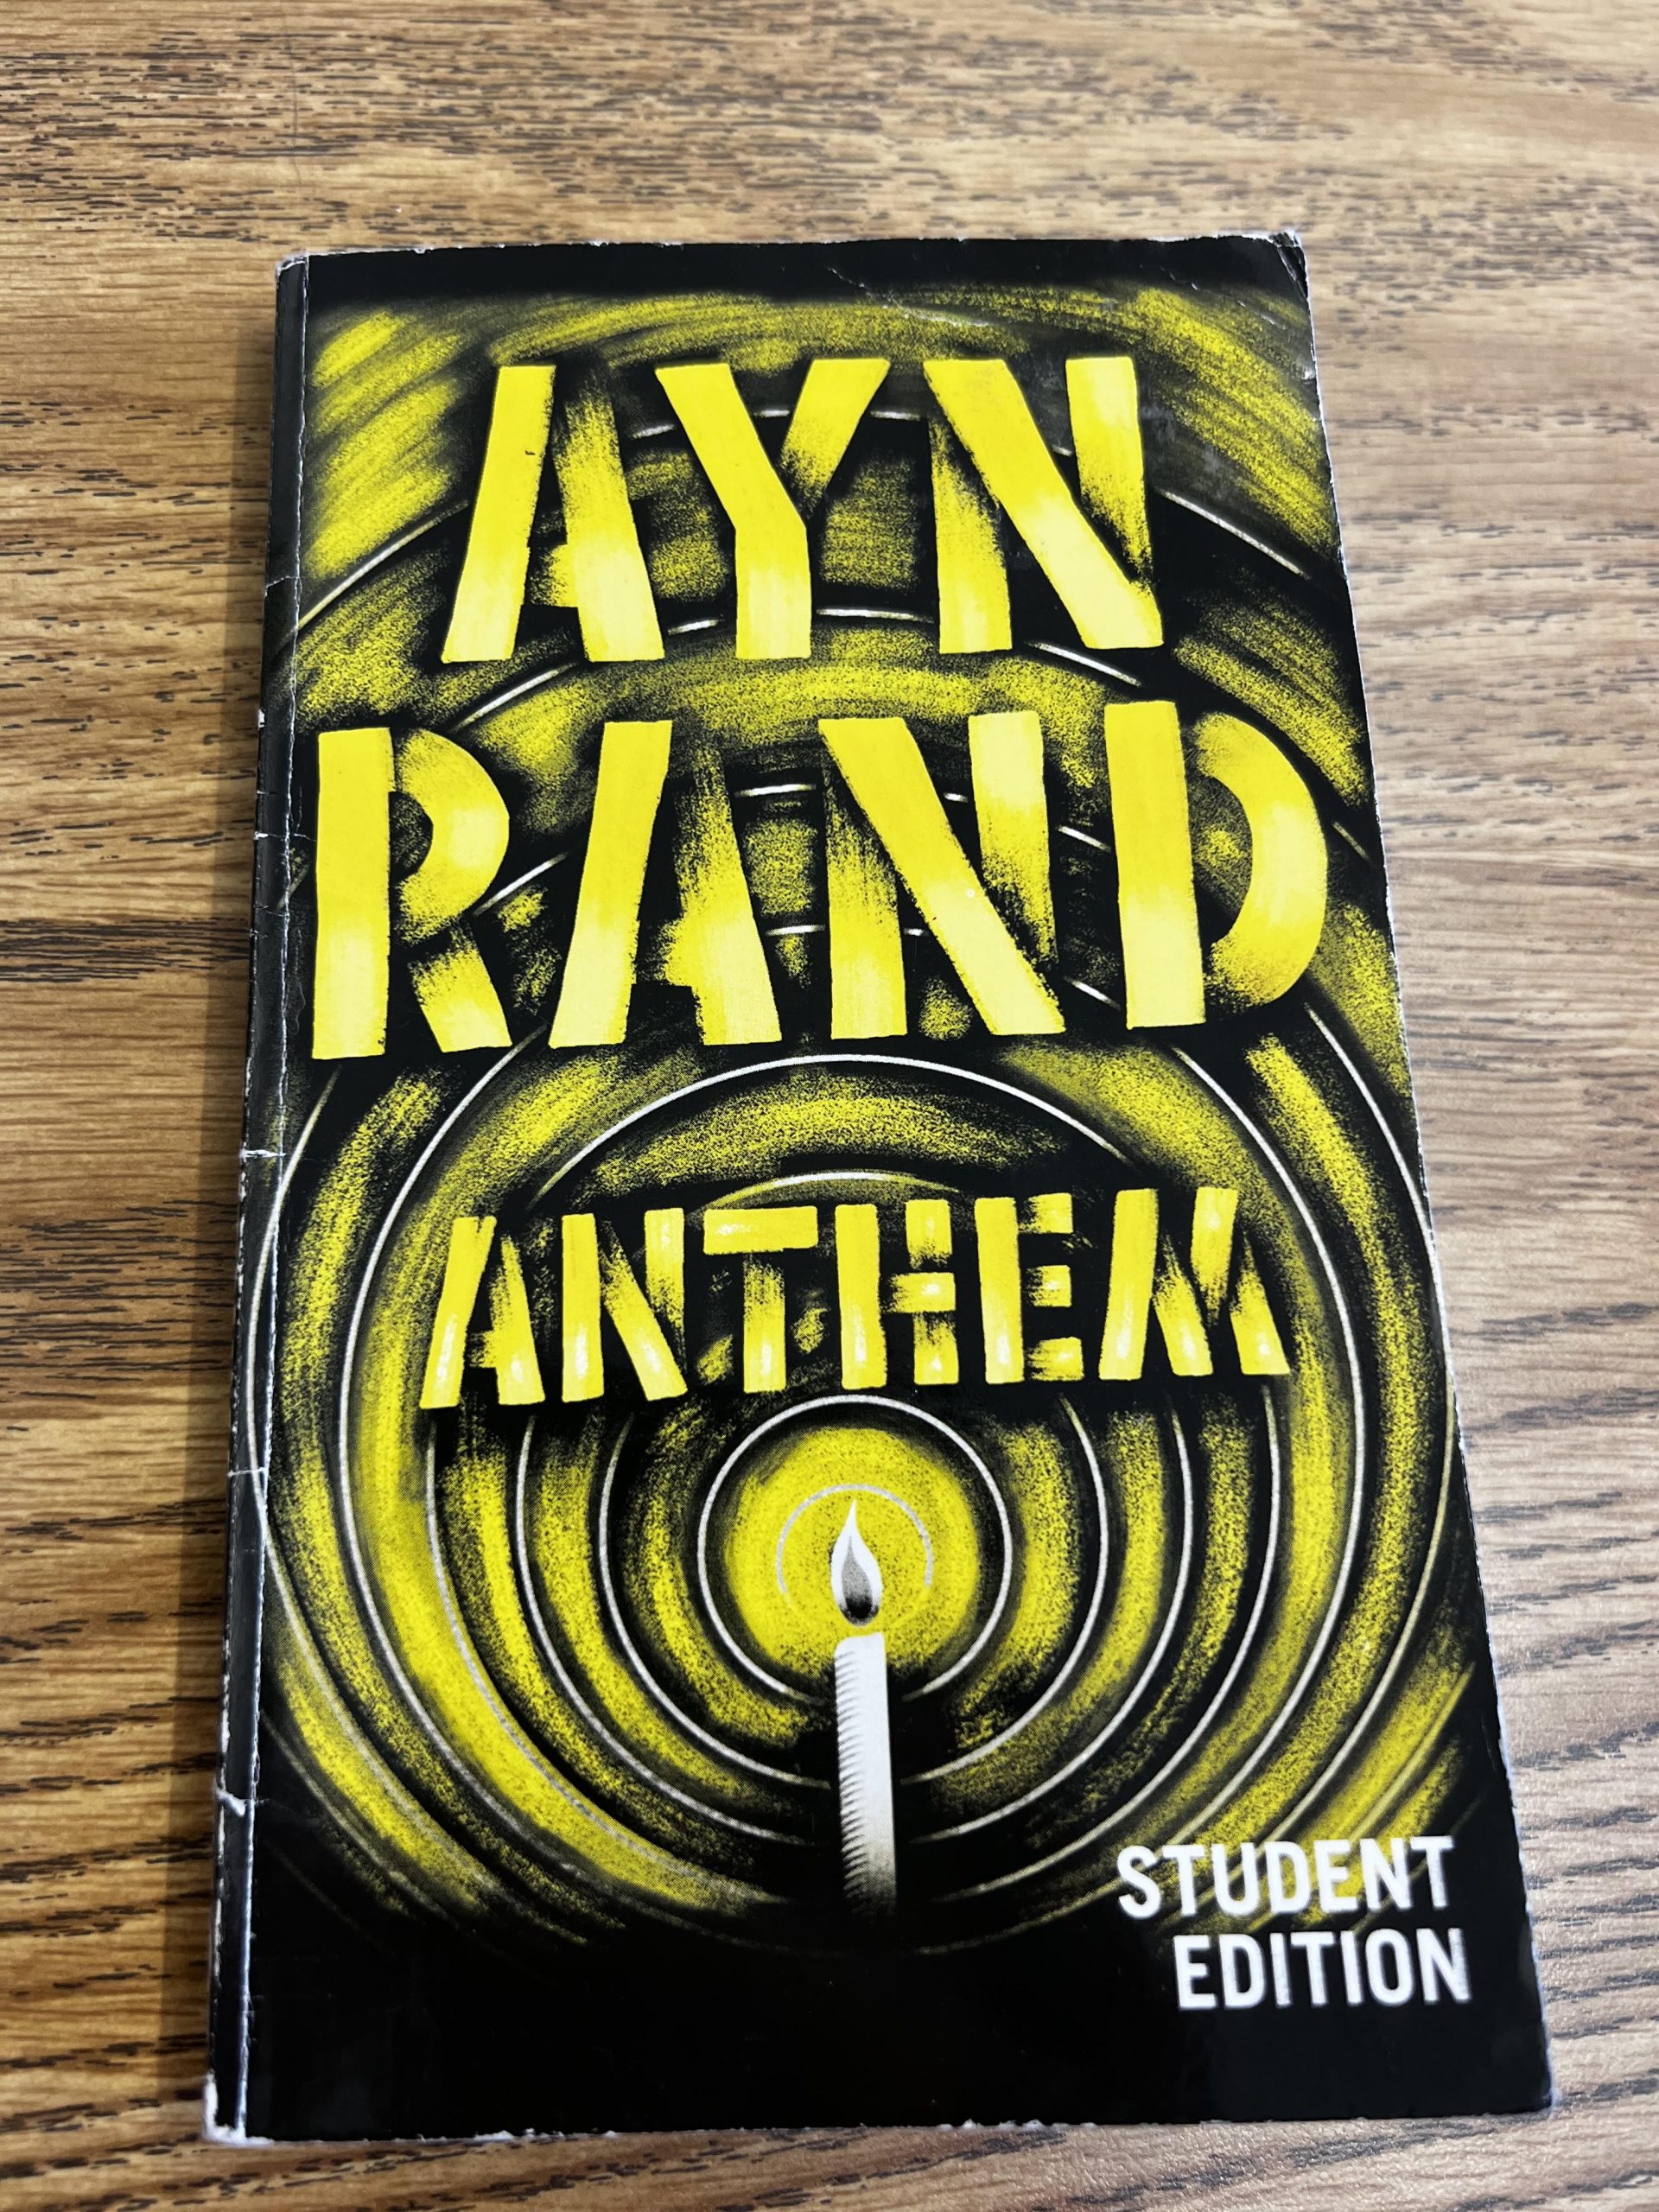 The novella, Anthem, by Ayn Rand.